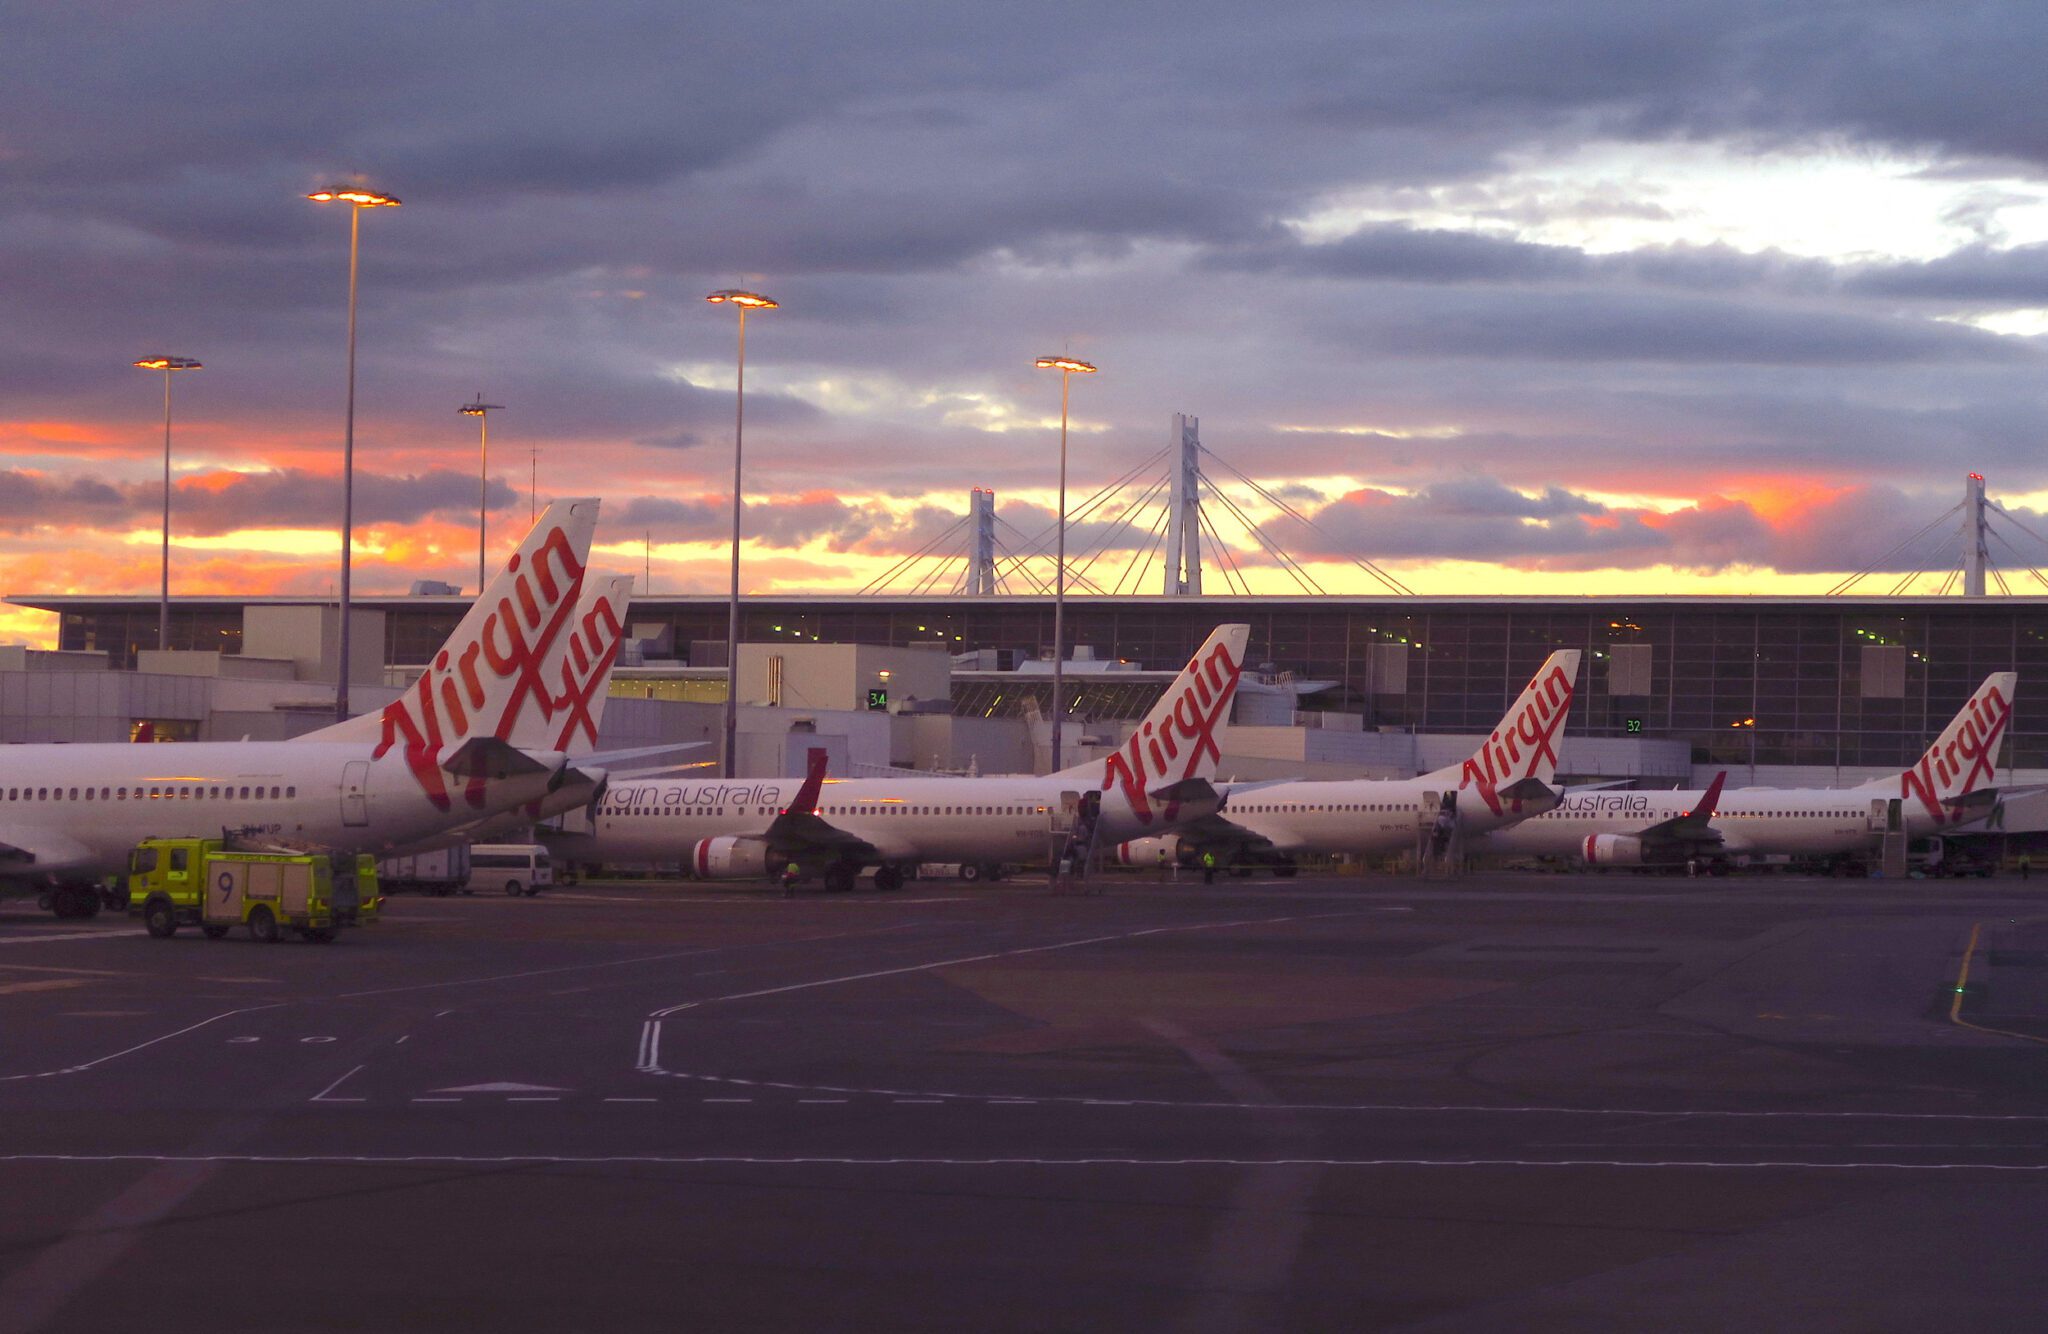 Virgin Australia planes on the tarmac in Sydney, Australia. 